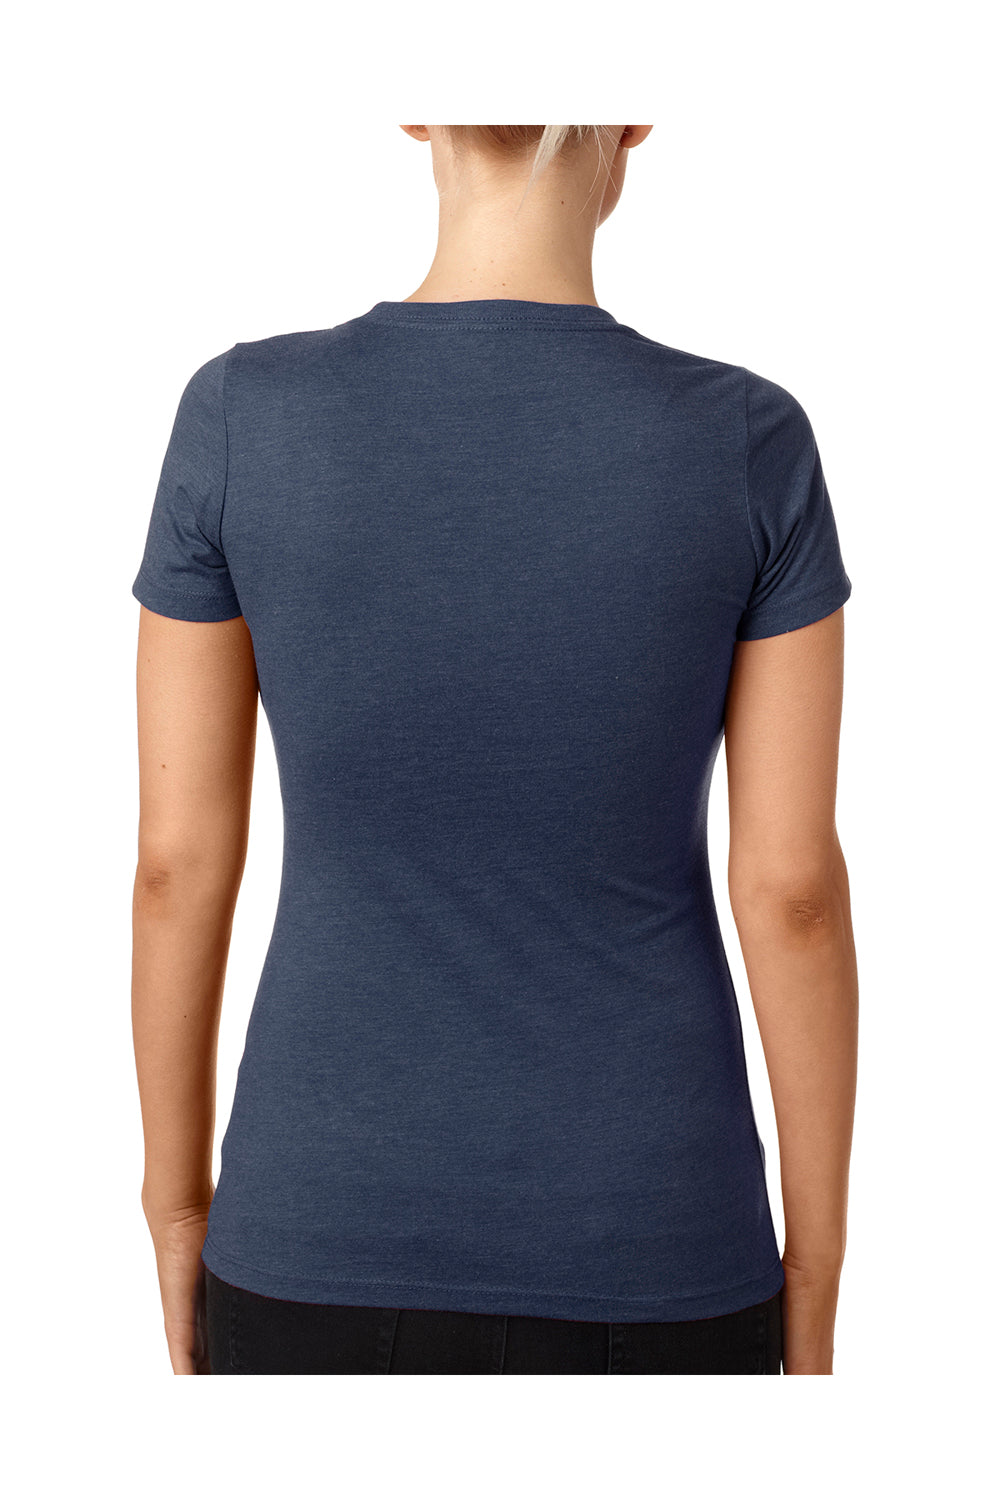 Next Level 6610 Womens CVC Jersey Short Sleeve Crewneck T-Shirt Indigo Blue Back